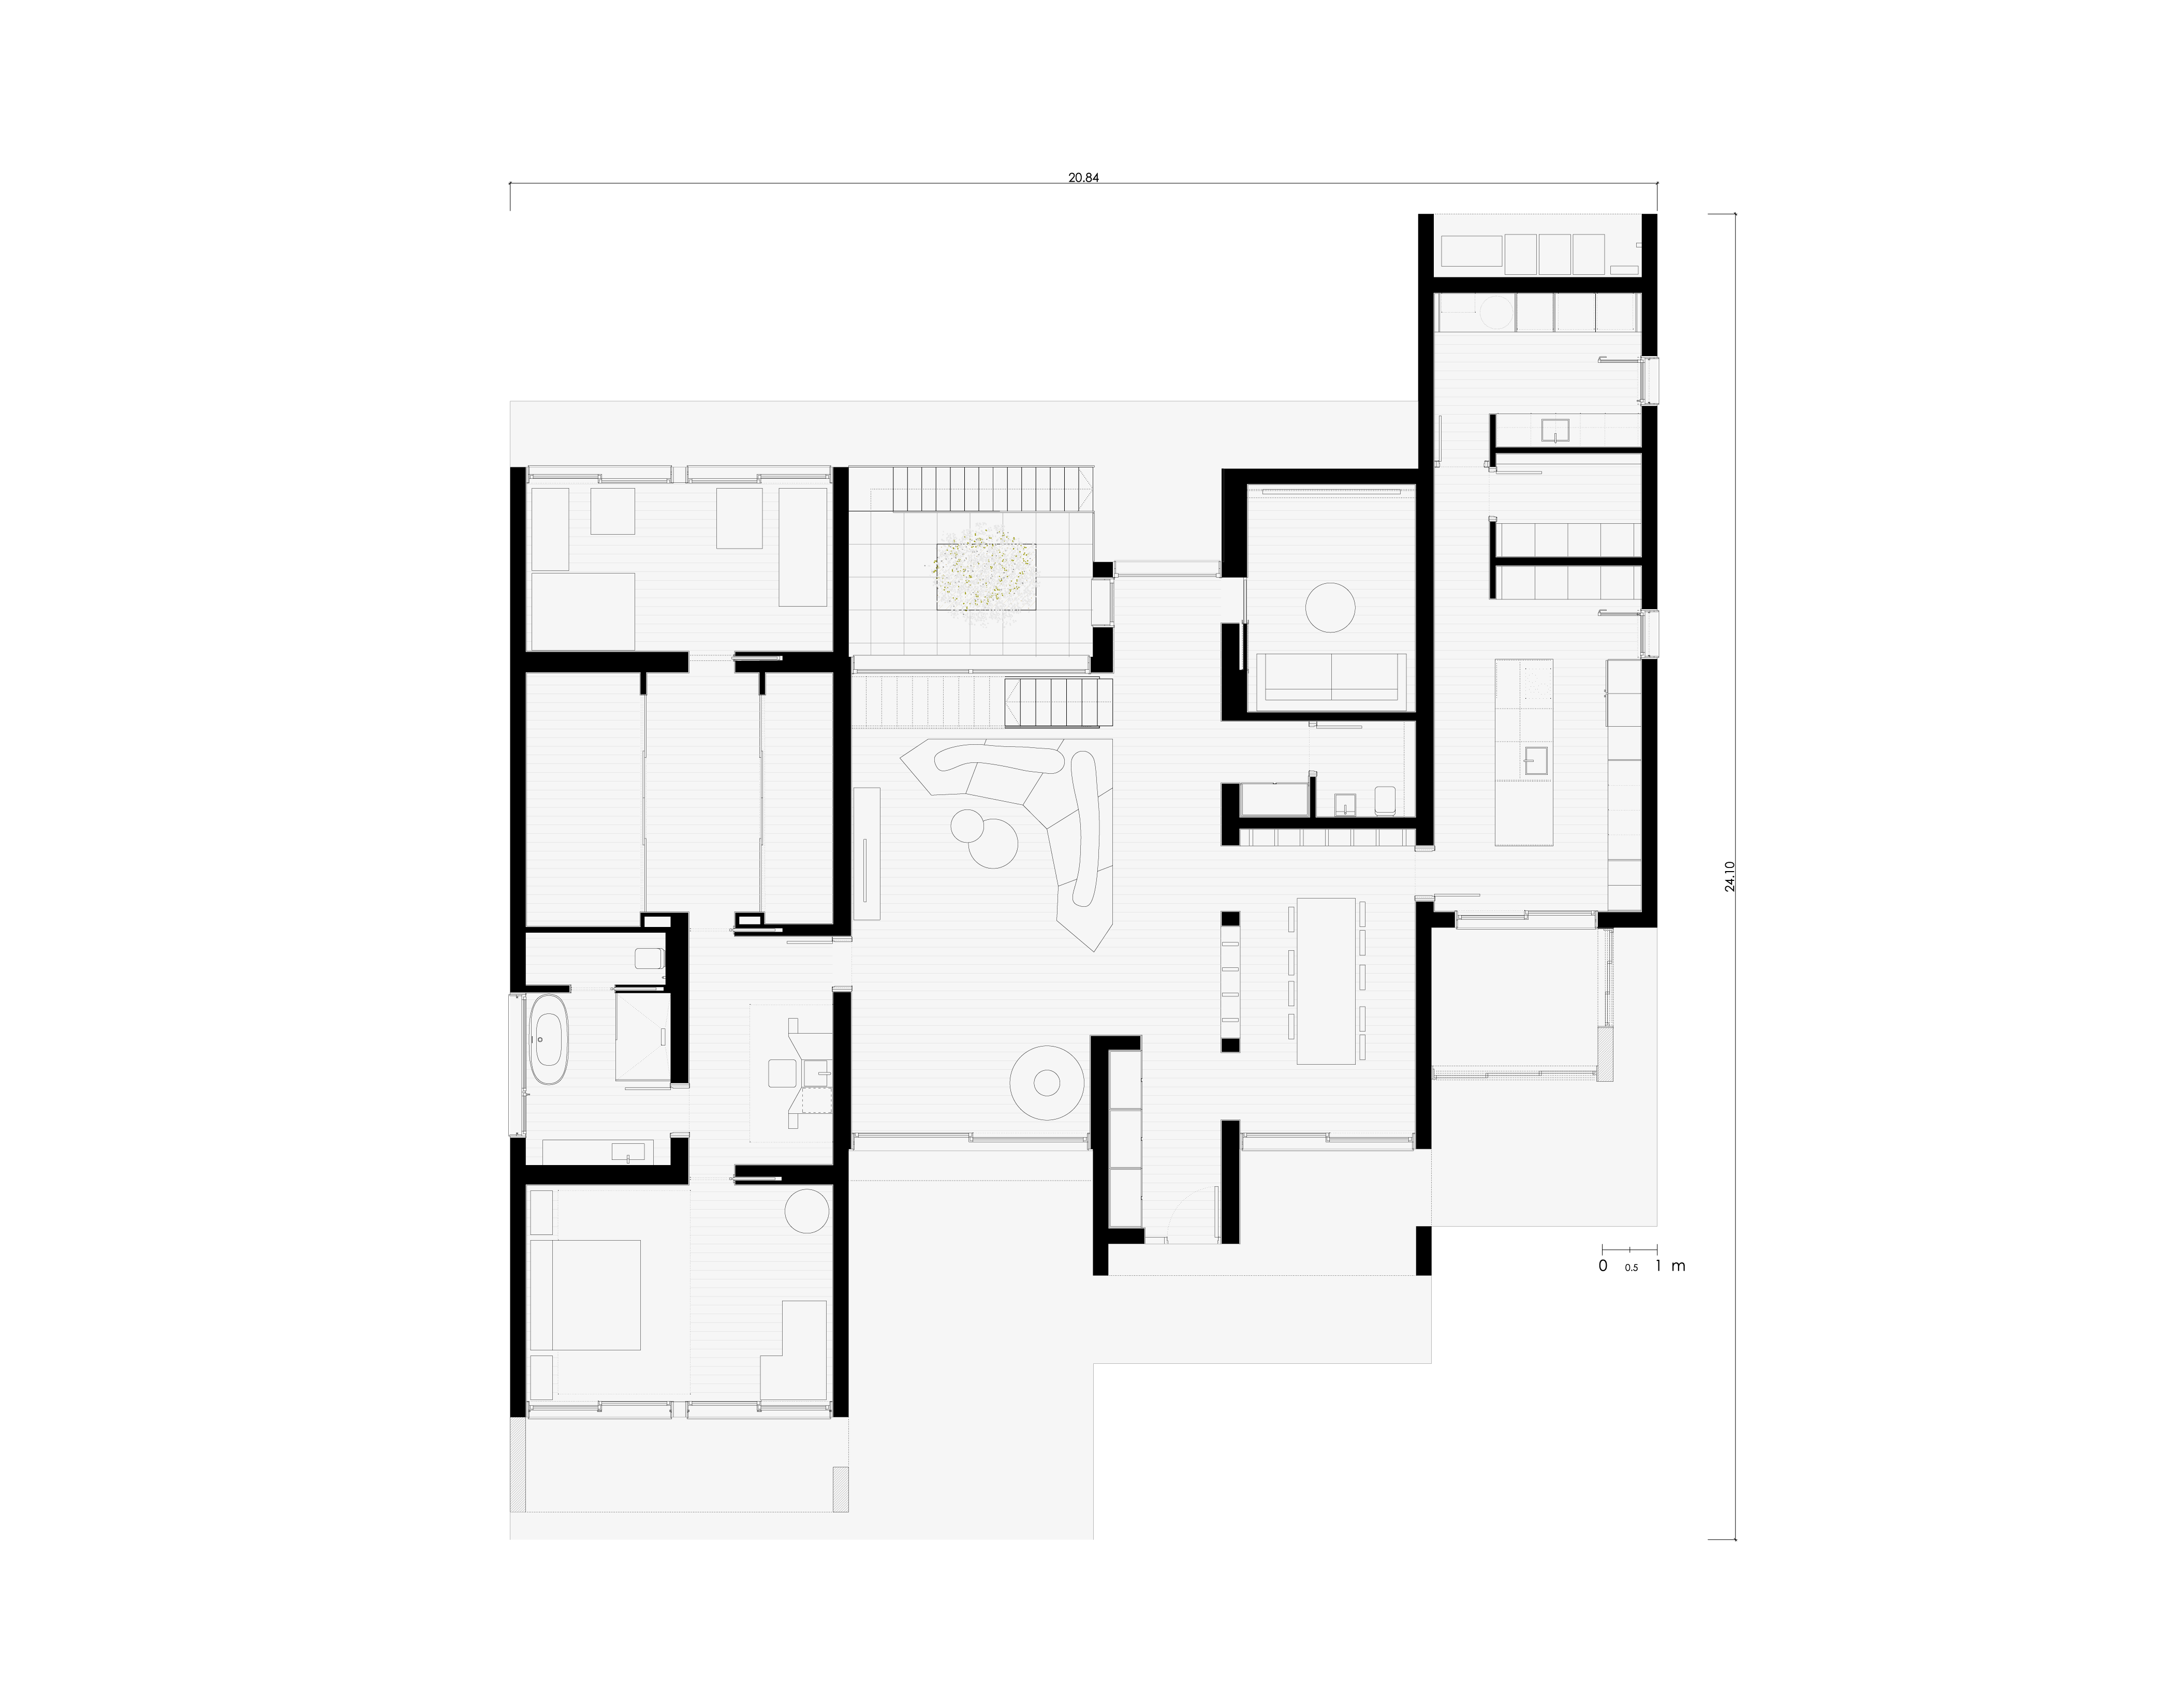 Casa modular de estilo arquitectónico moderno - Plano planta baja